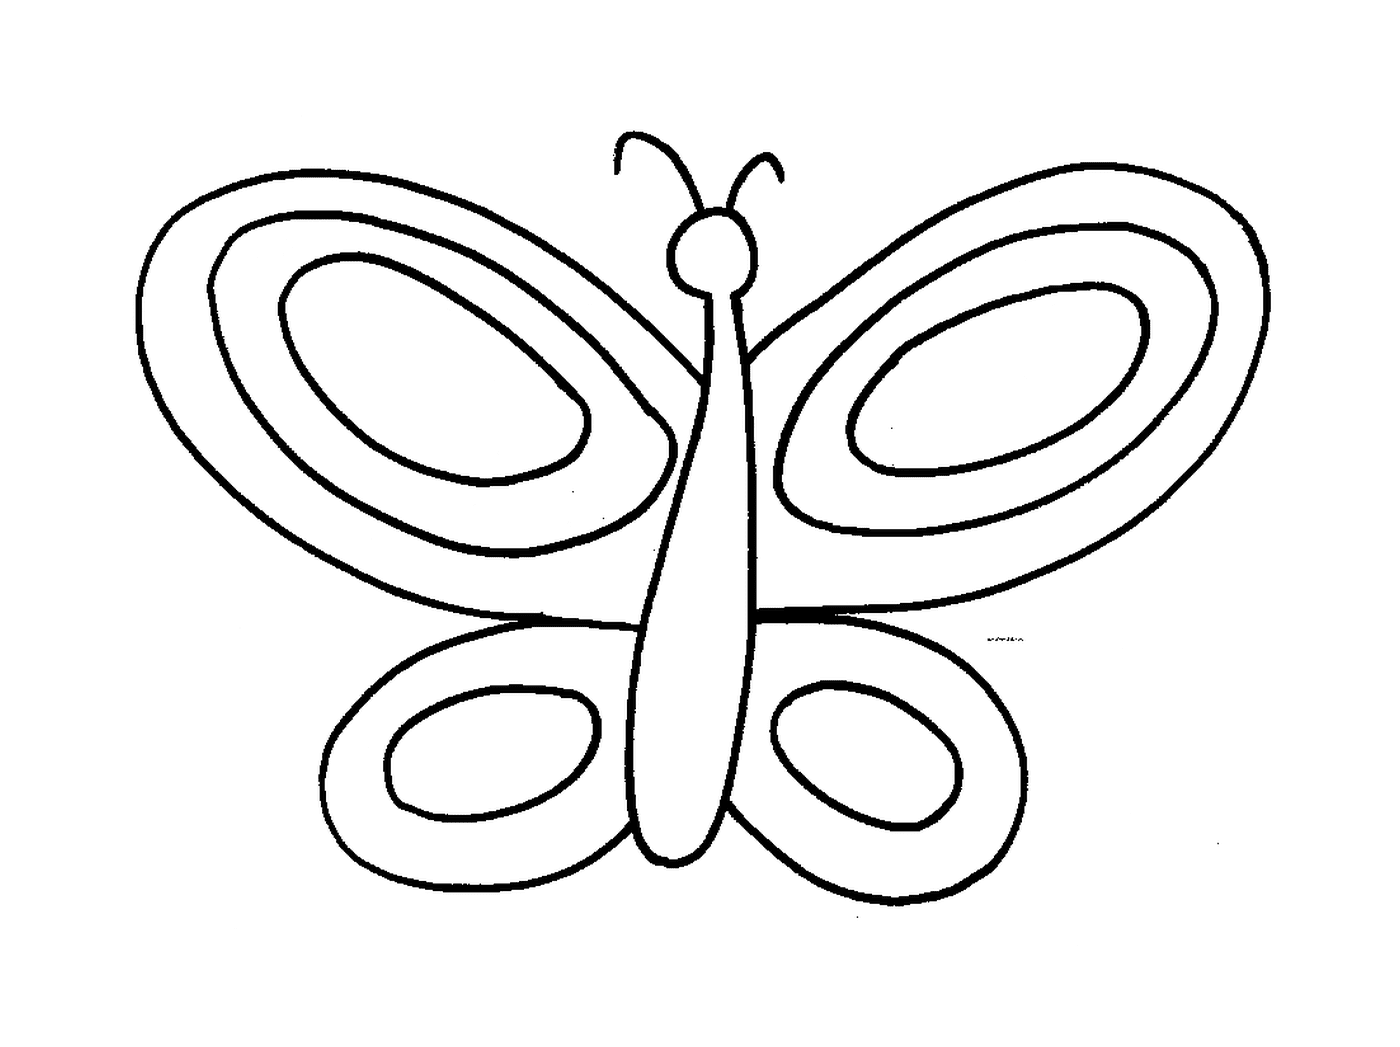  mariposa parpadeante con ligereza 